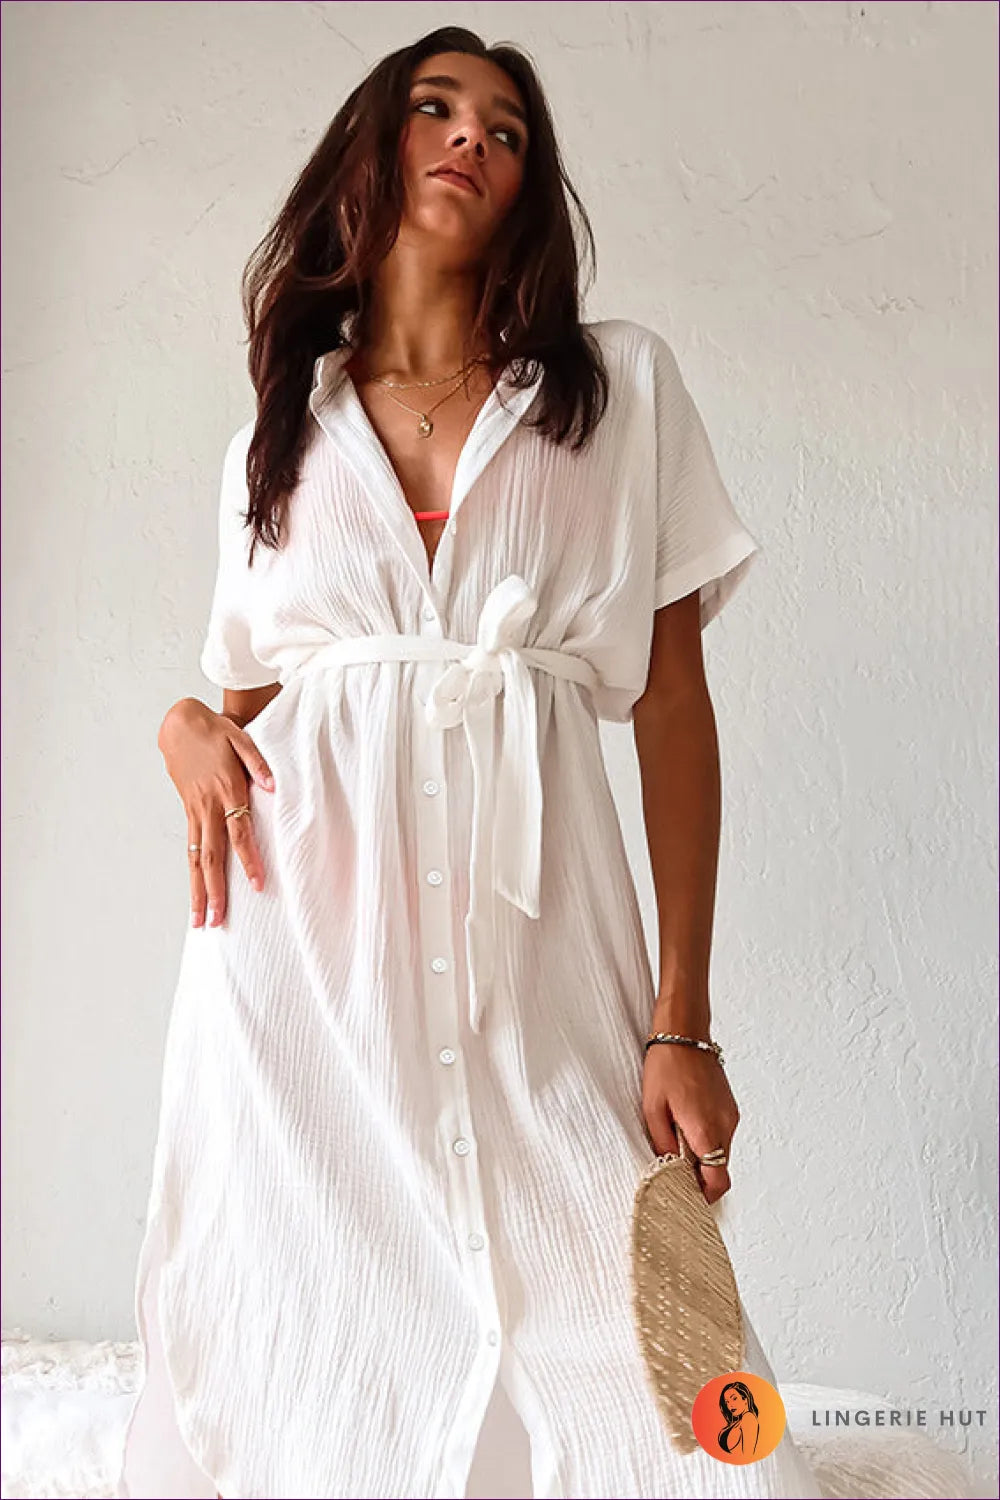 Breezy White Cotton Shirt Dress - Effortless Chic